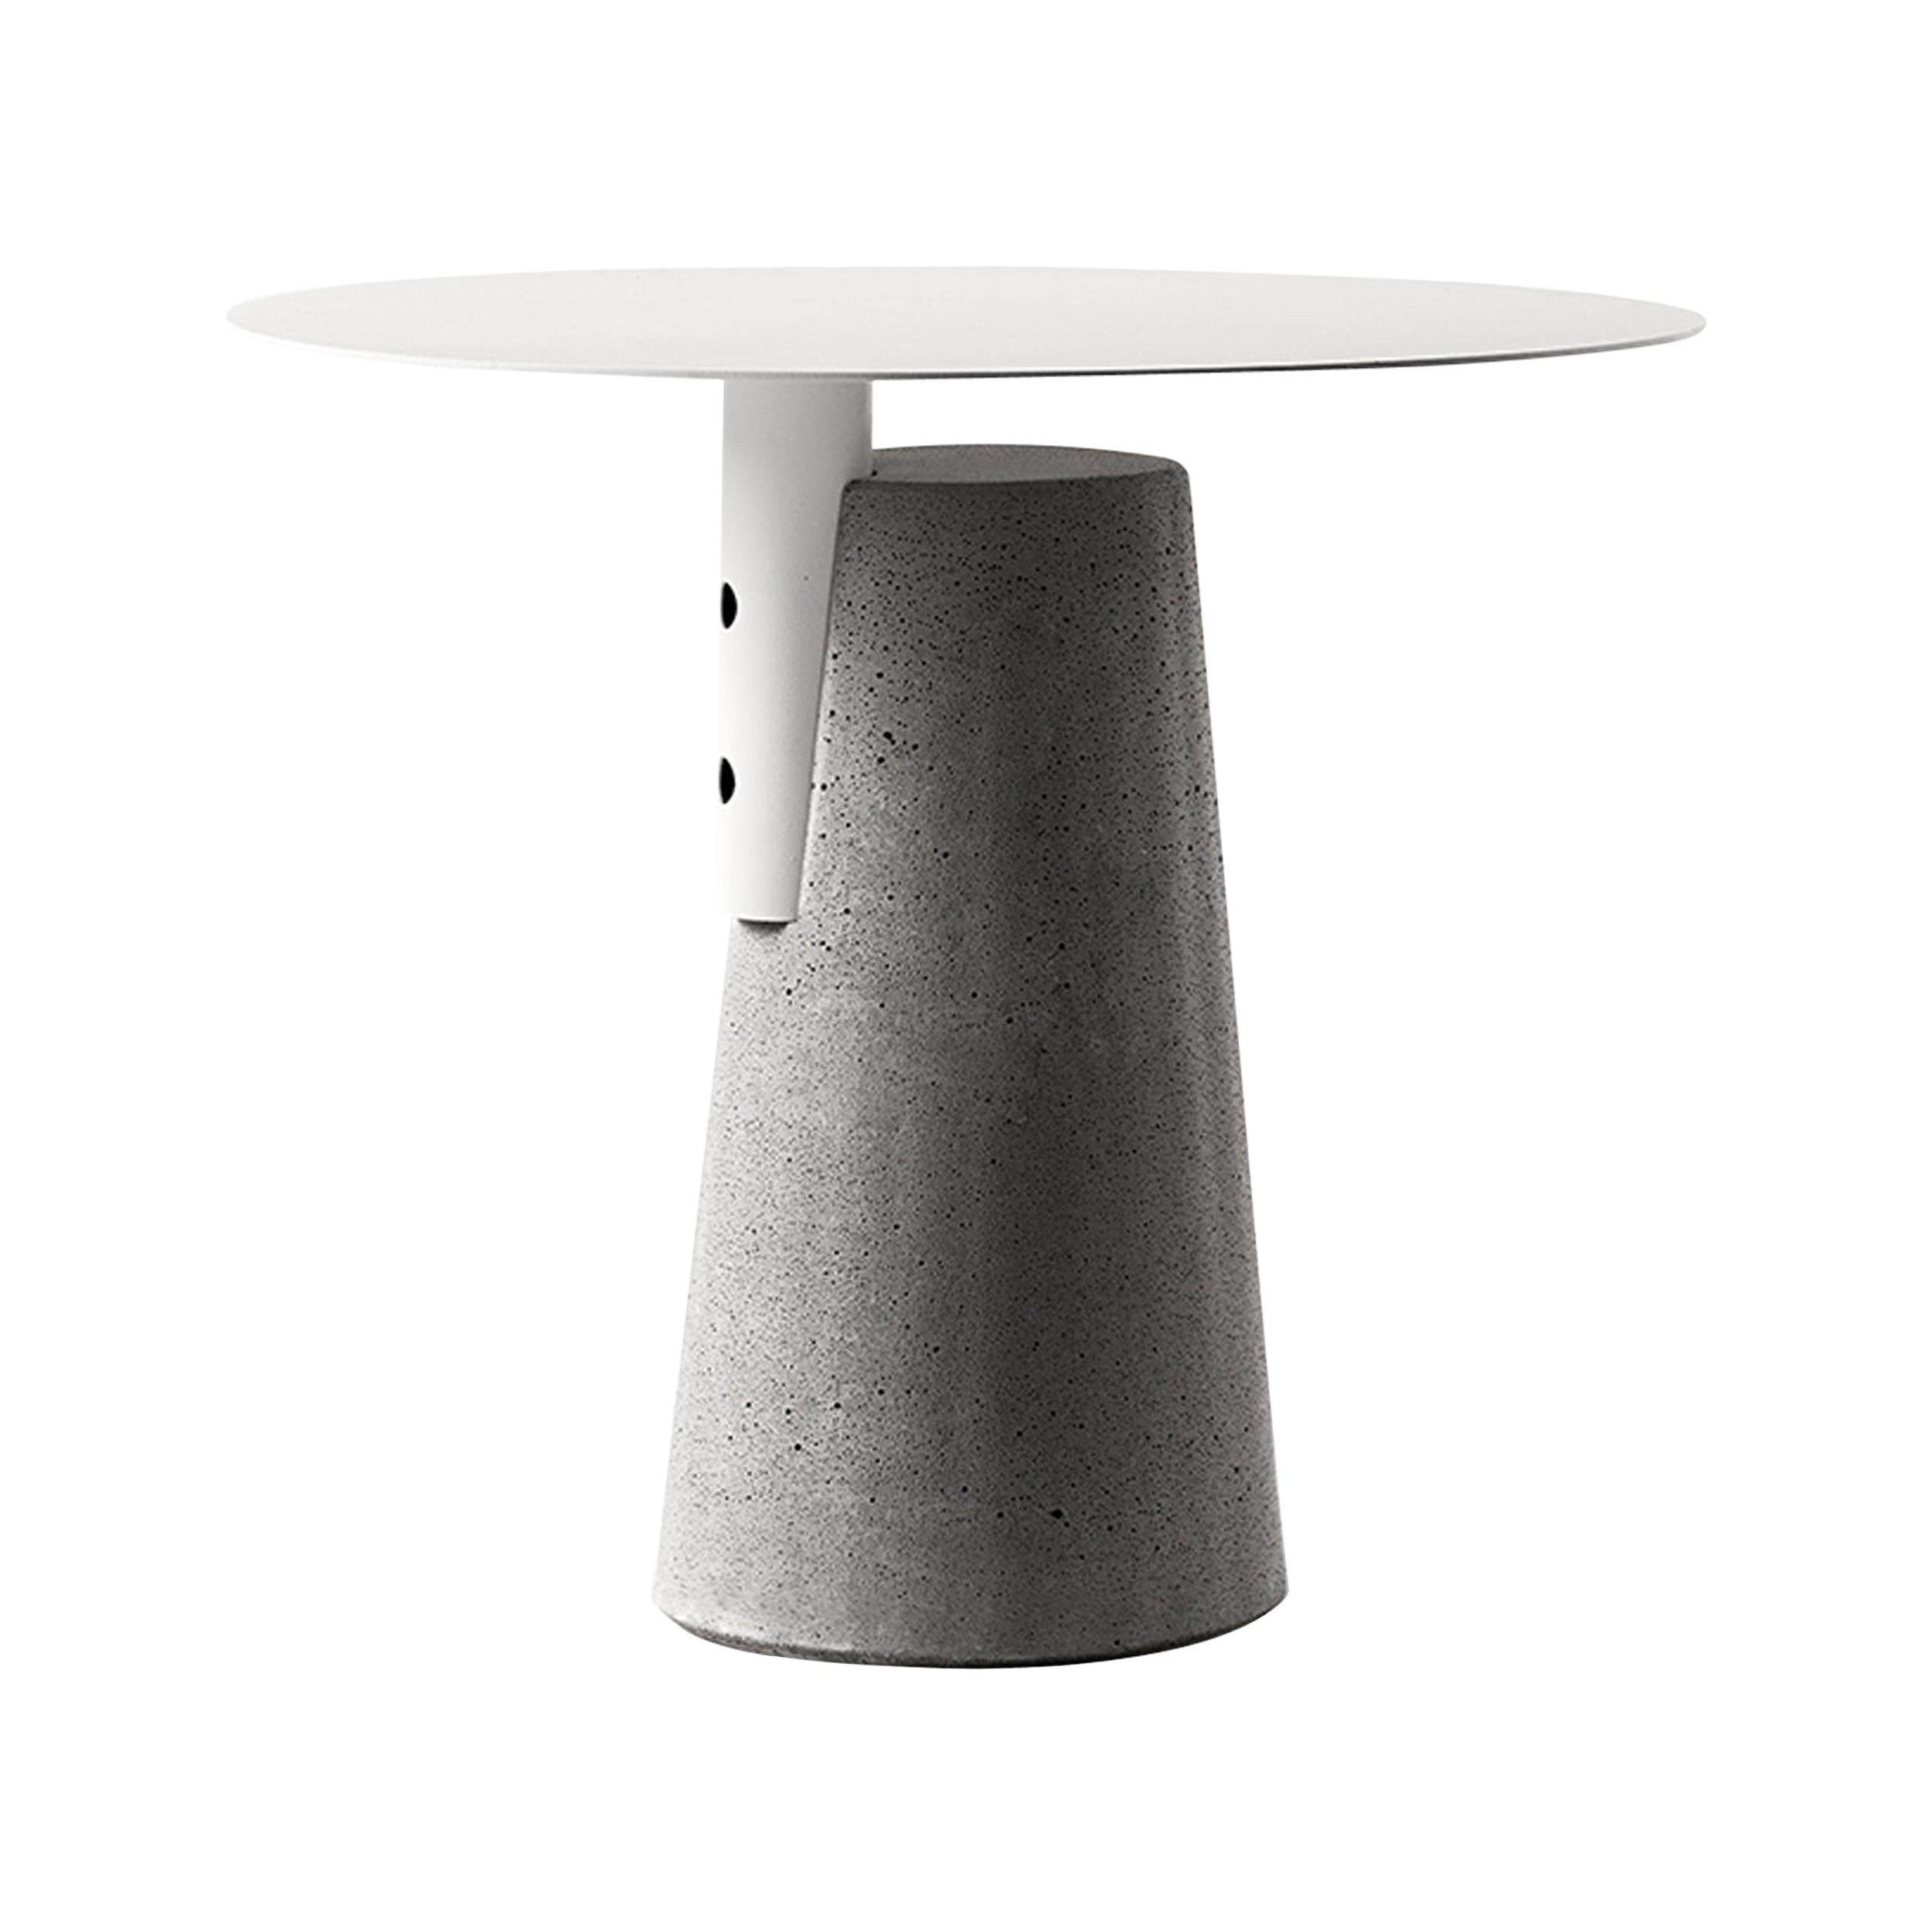 Bentu Design End Tables